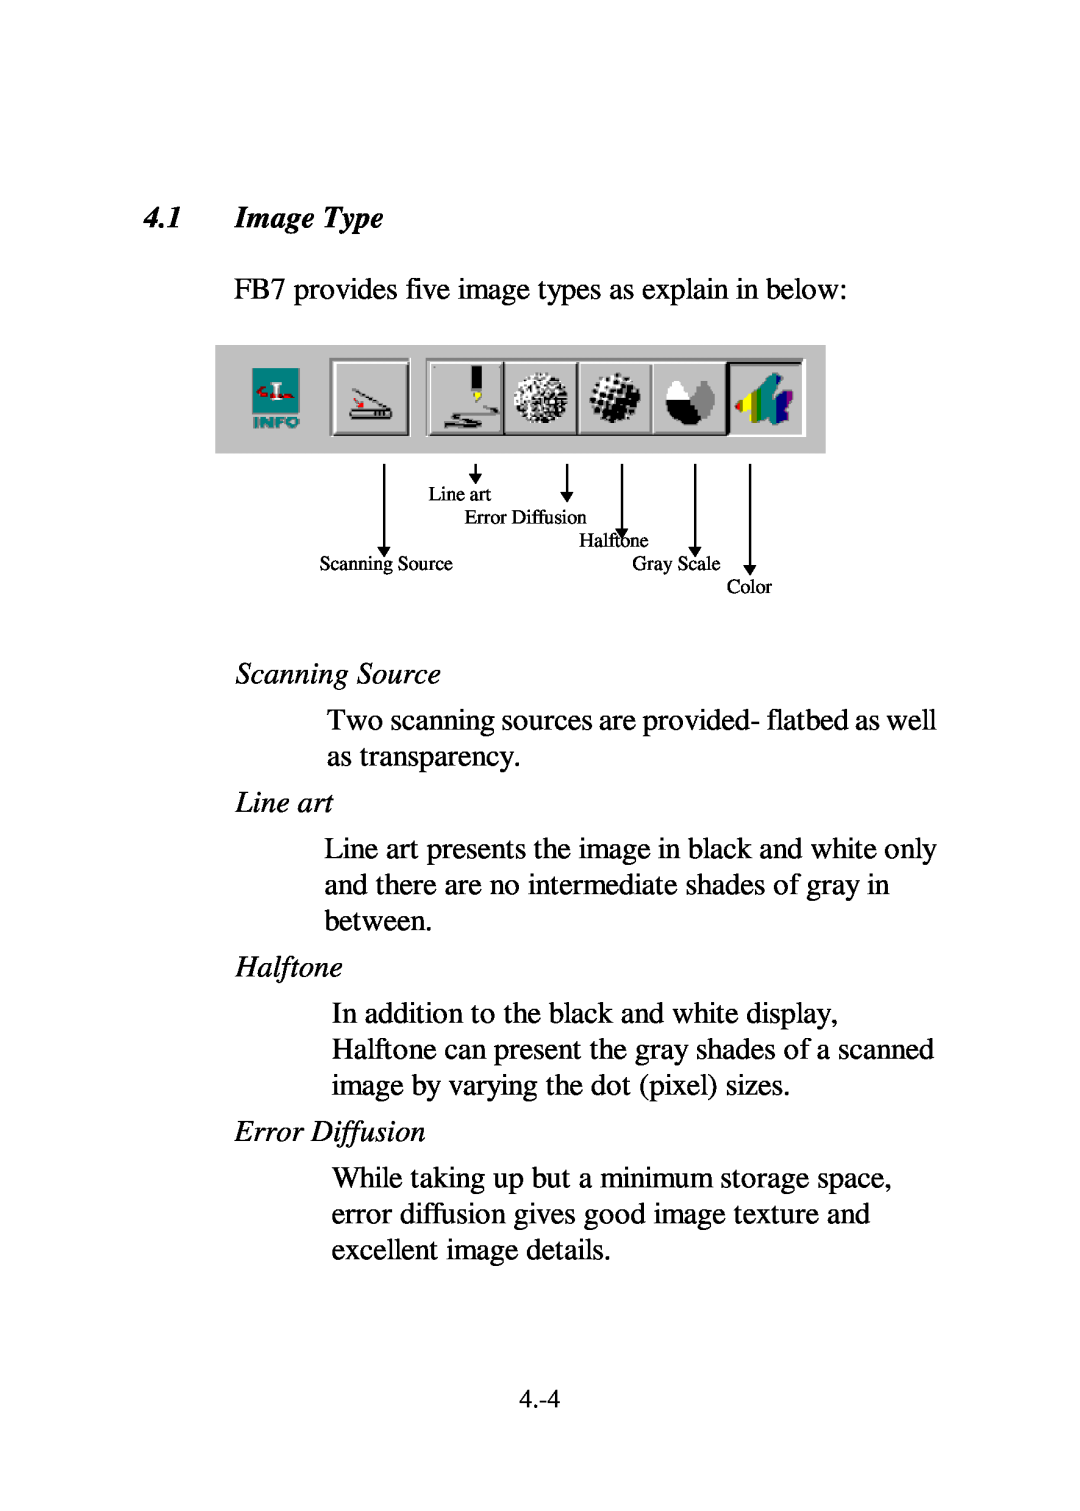 IBM Ricoh FB735 user manual Image Type, Scanning Source, Line art, Halftone, Error Diffusion 